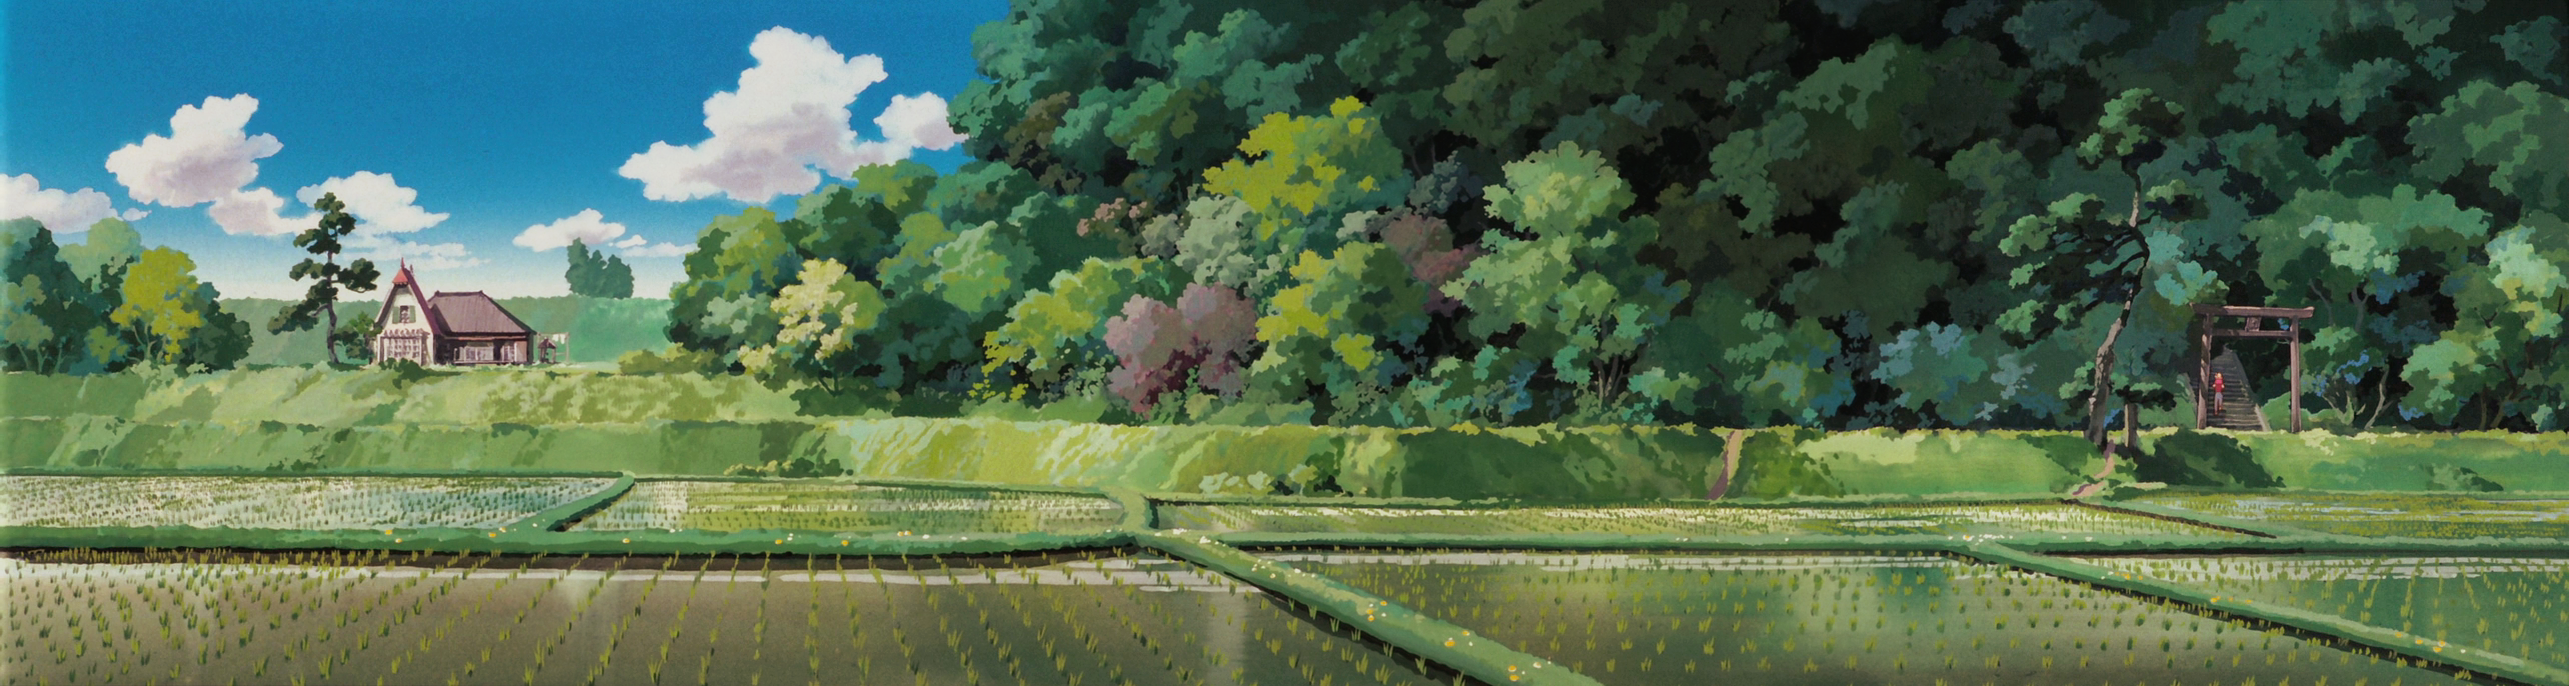 Exclusive Studio Ghibli Image